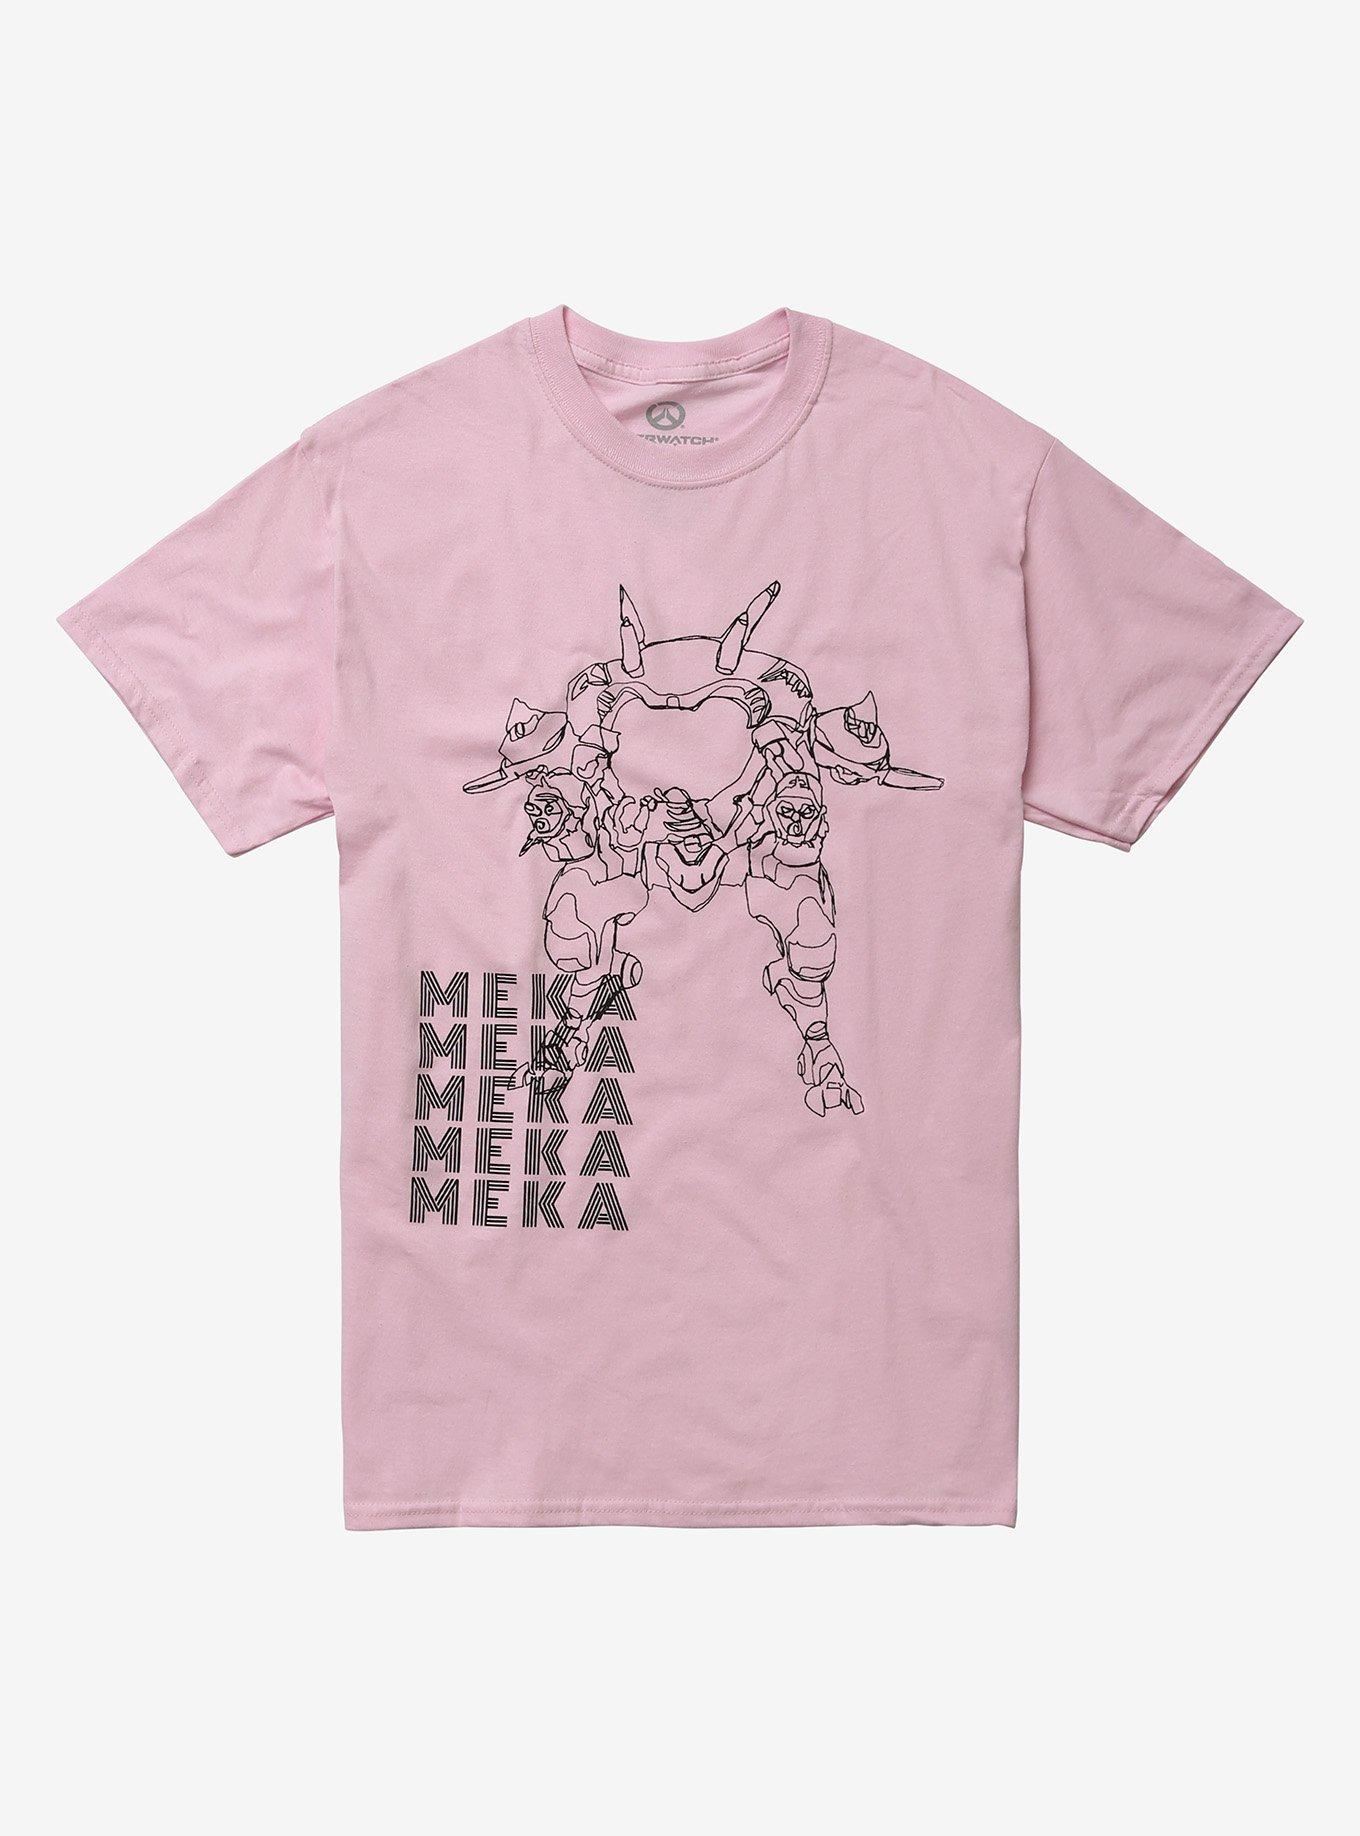 Blizzard Overwatch MEKA T-Shirt, LIGHT PINK, hi-res